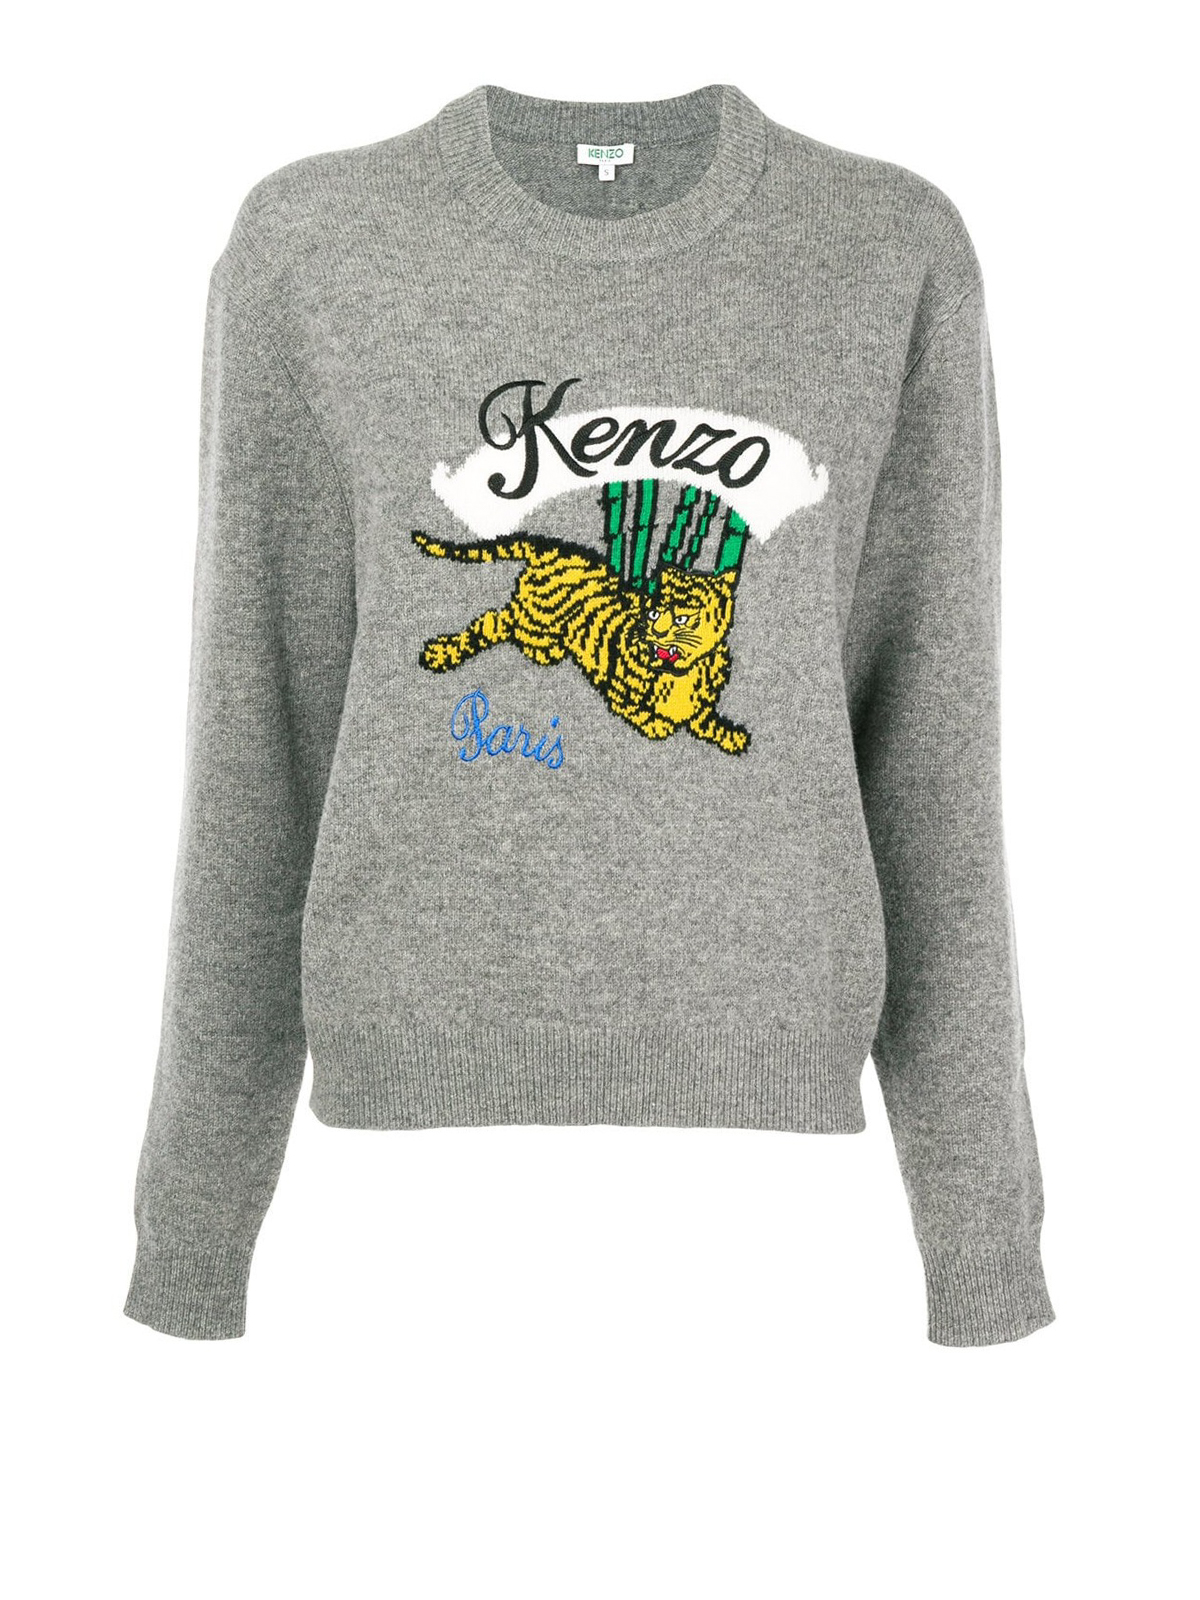 Stimulans Sporten leugenaar Crew necks Kenzo - Jumping Tiger grey wool jacquard sweater - F862TO5373XC95